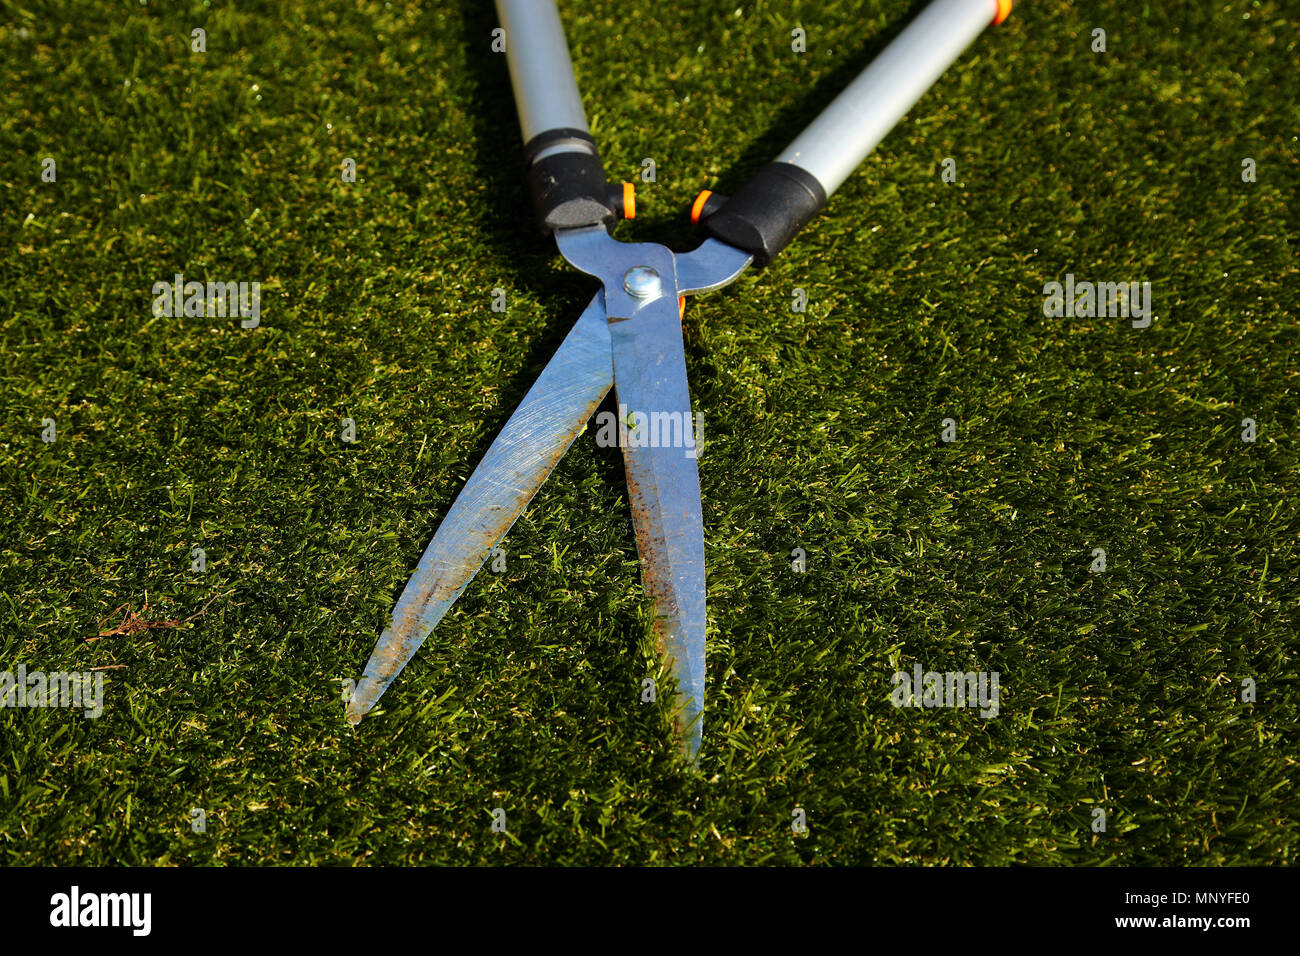 Garden shears tool lying on grass in a back garden yard Stock Photo